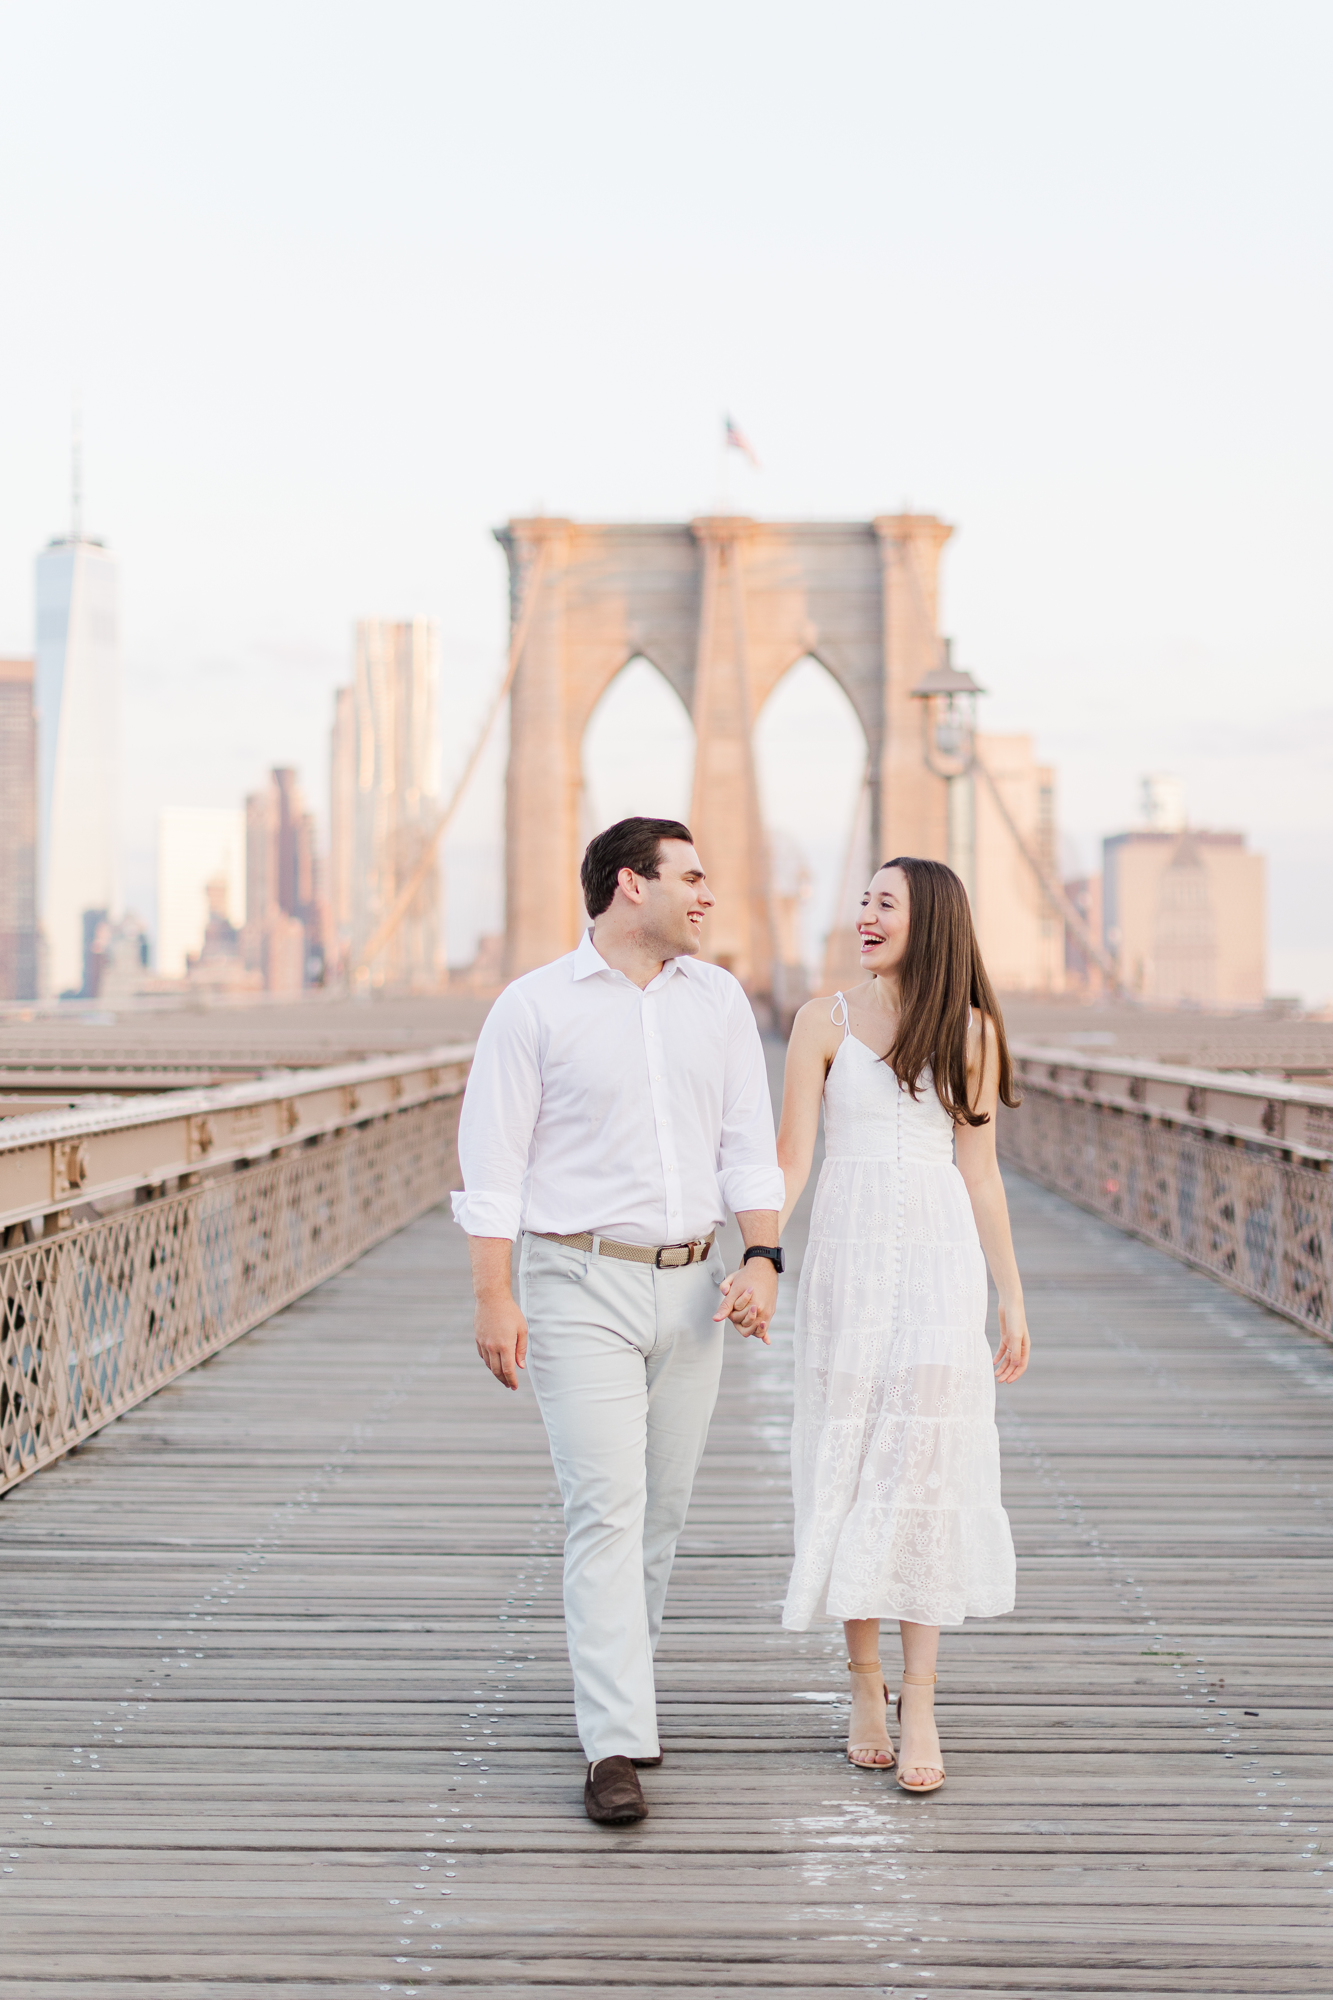 Sweet Brooklyn Bridge Engagement Photography